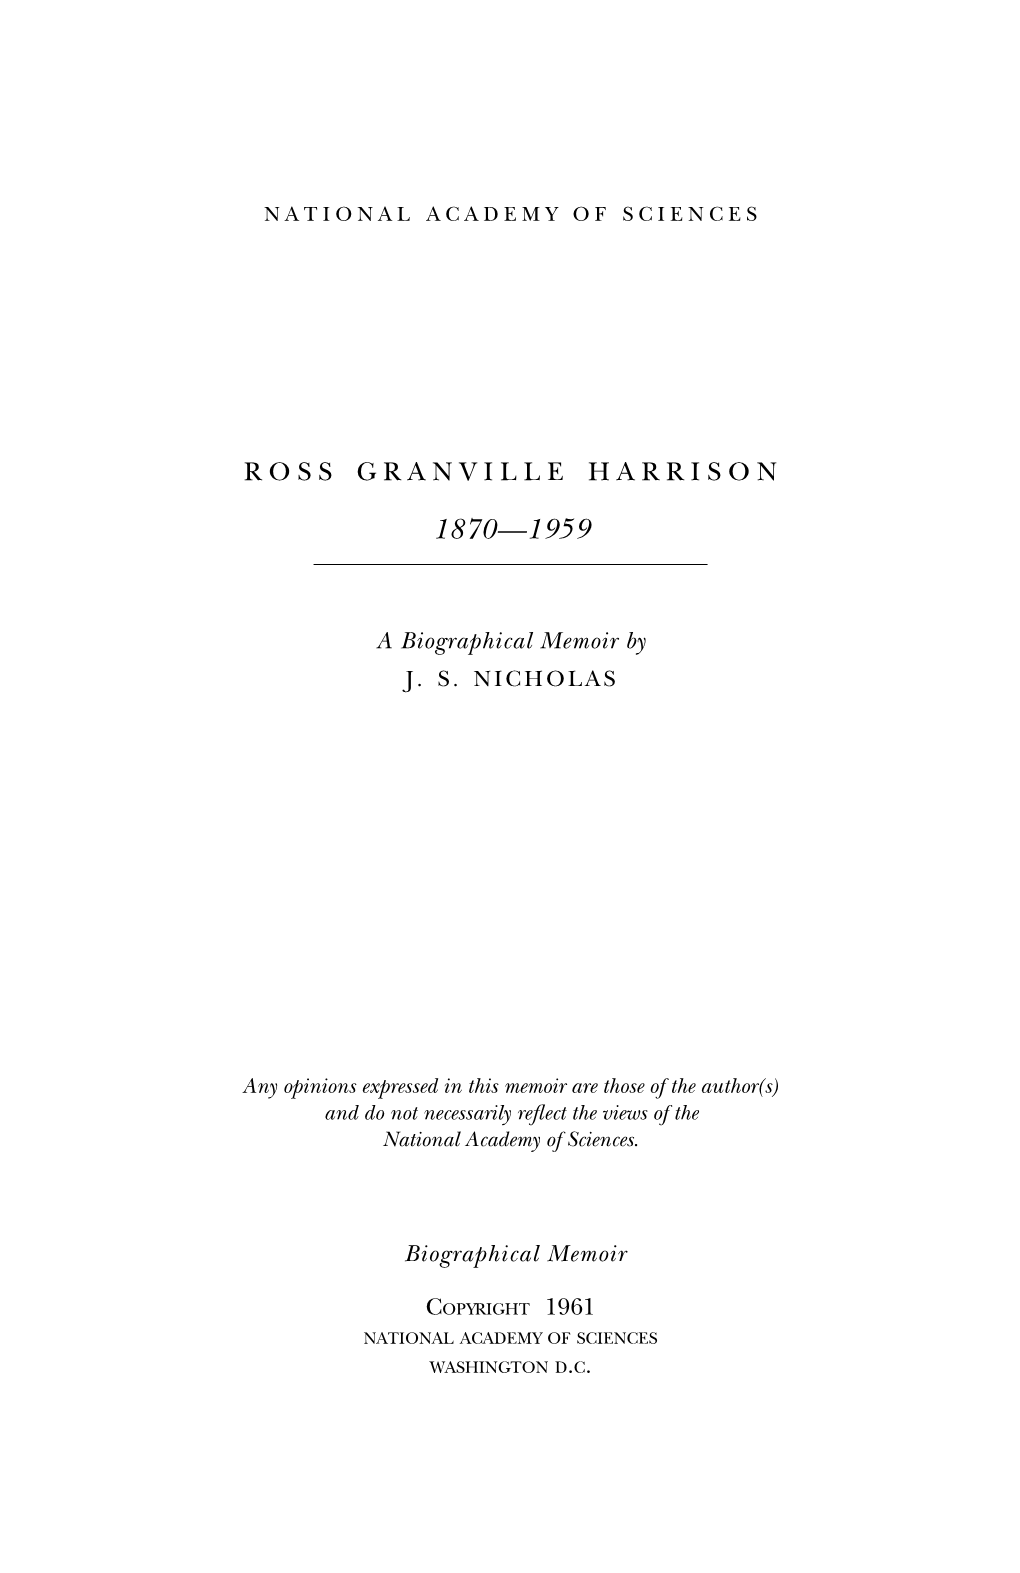 Ross Granville Harrison